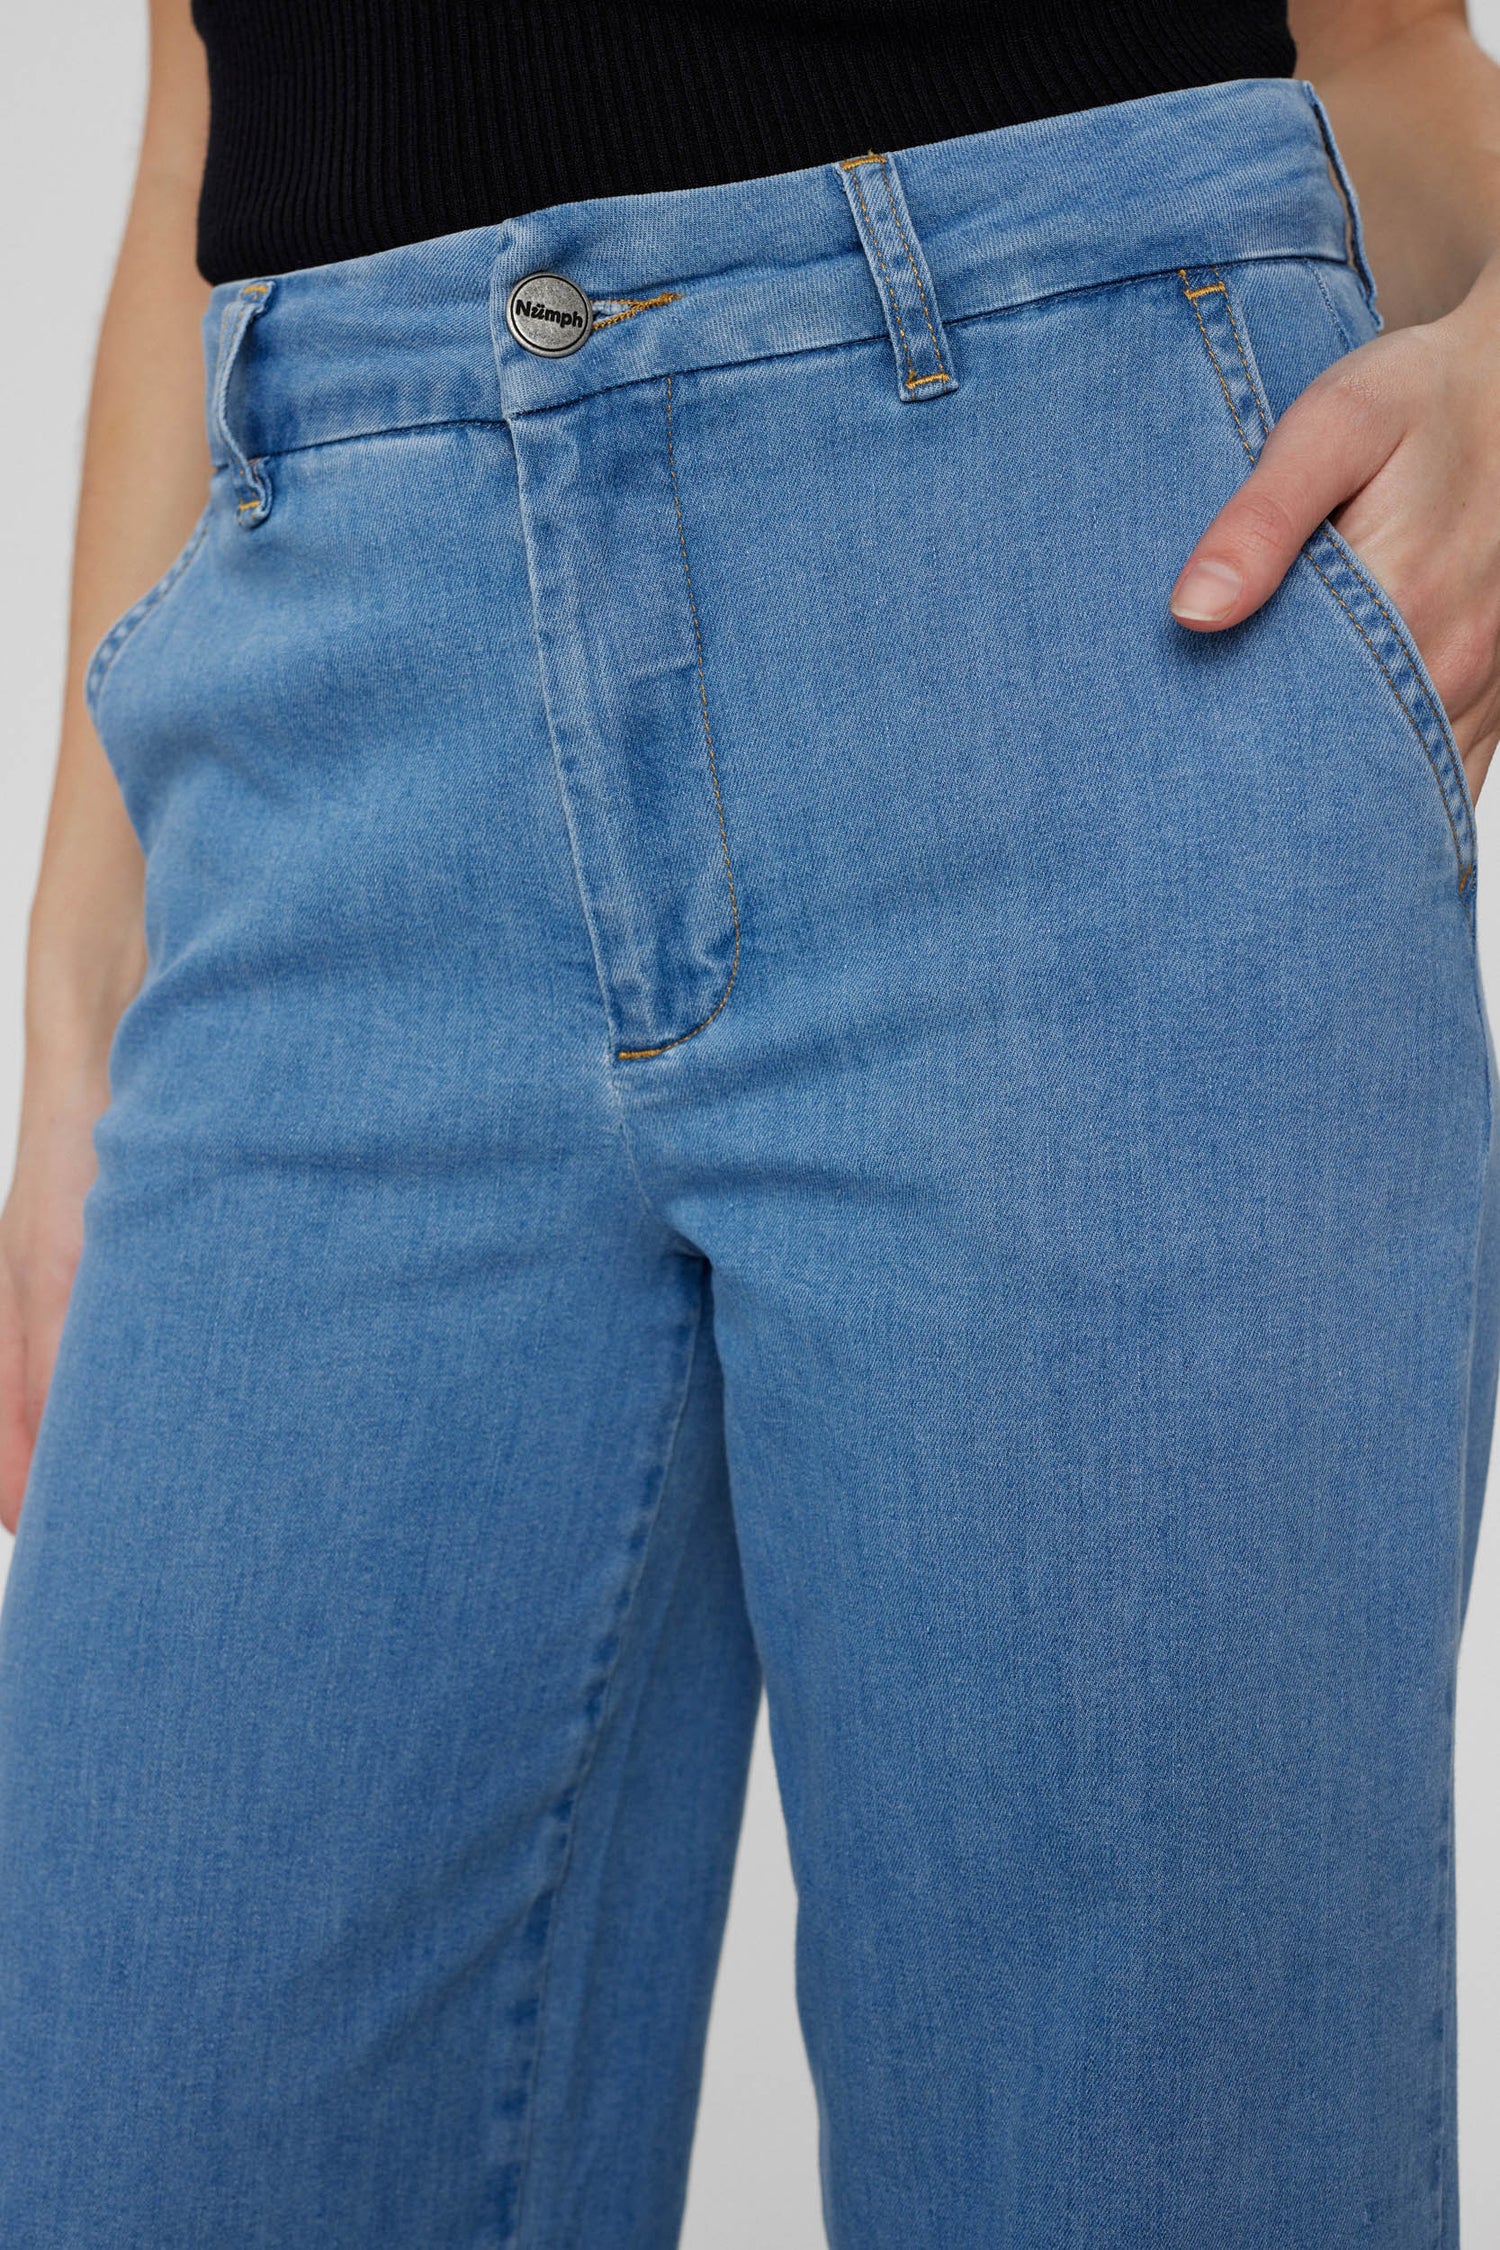 Nümph Nuamber Jeans in Light Denim Wash